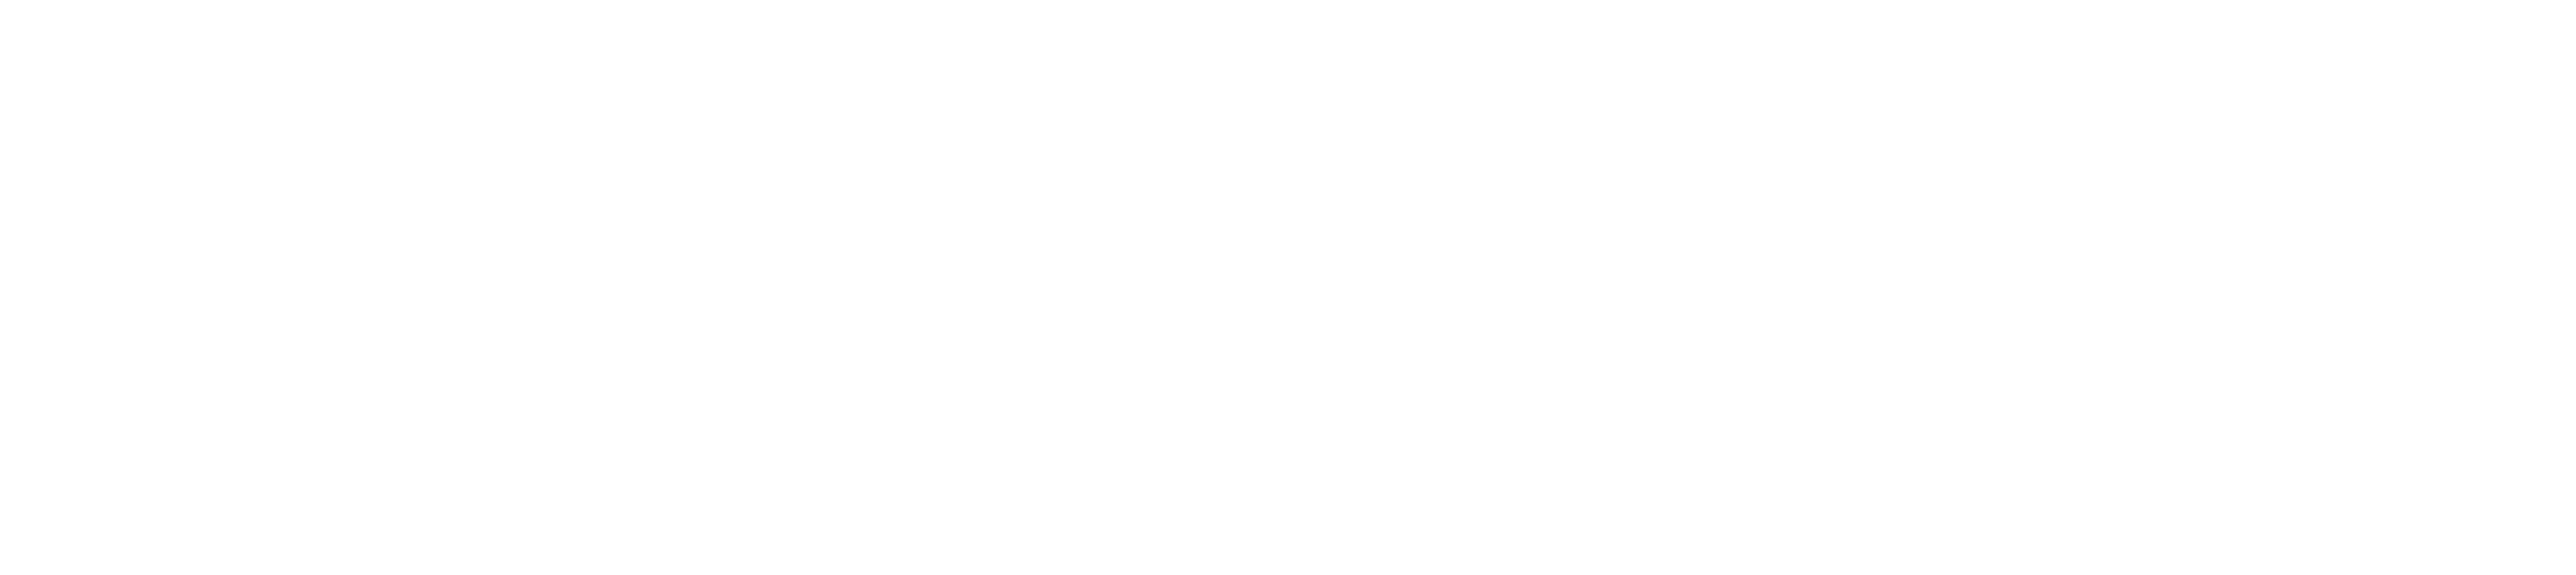 Chany paskes logo